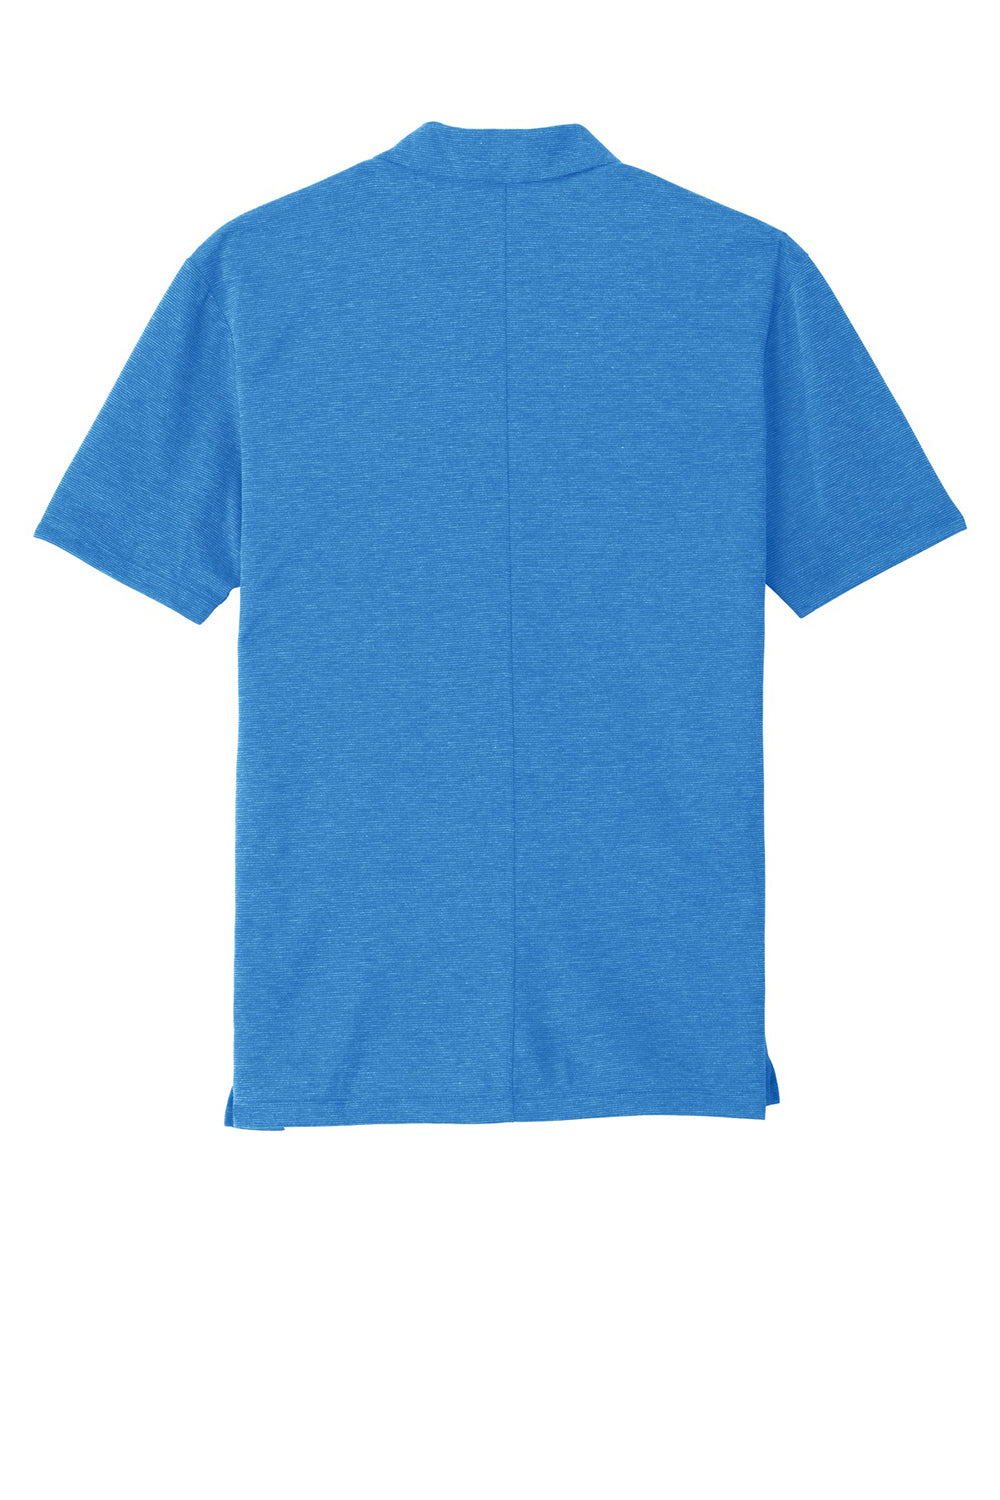 Nike NKAA1854 Mens Prime Dri-Fit Moisture Wicking Short Sleeve Polo Shirt Photo Blue Flat Back